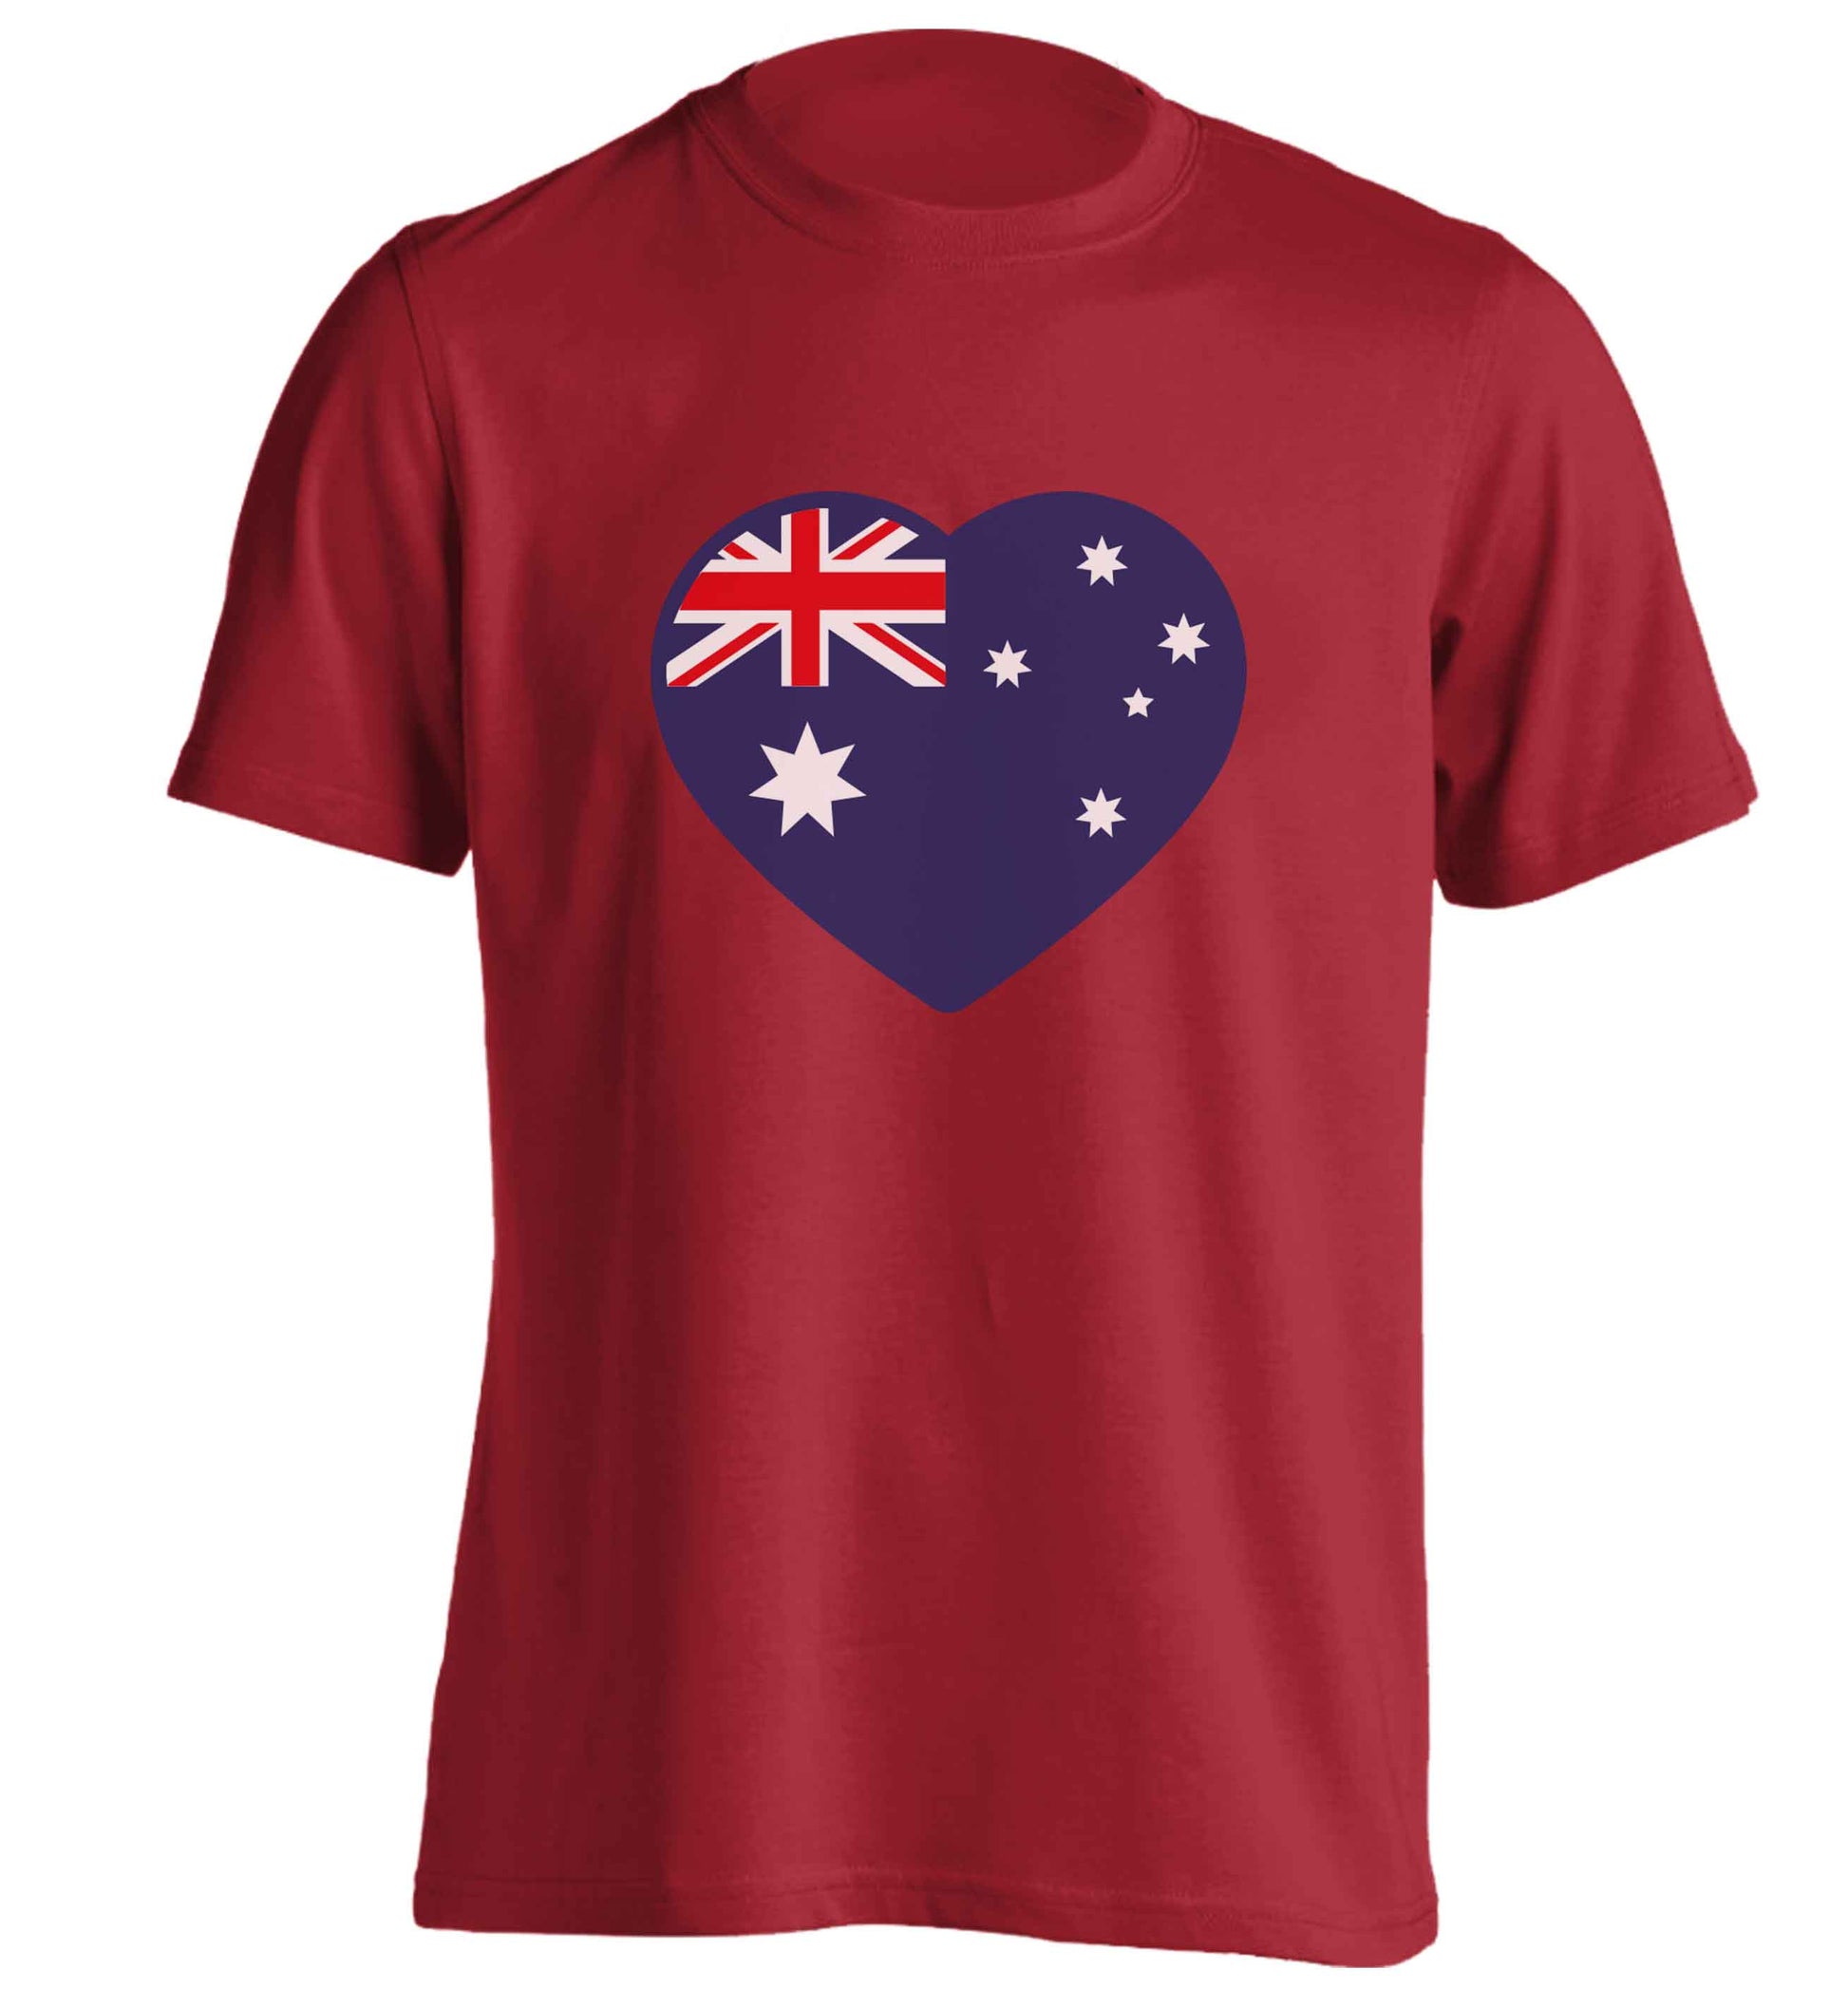 Australian Heart adults unisex red Tshirt 2XL